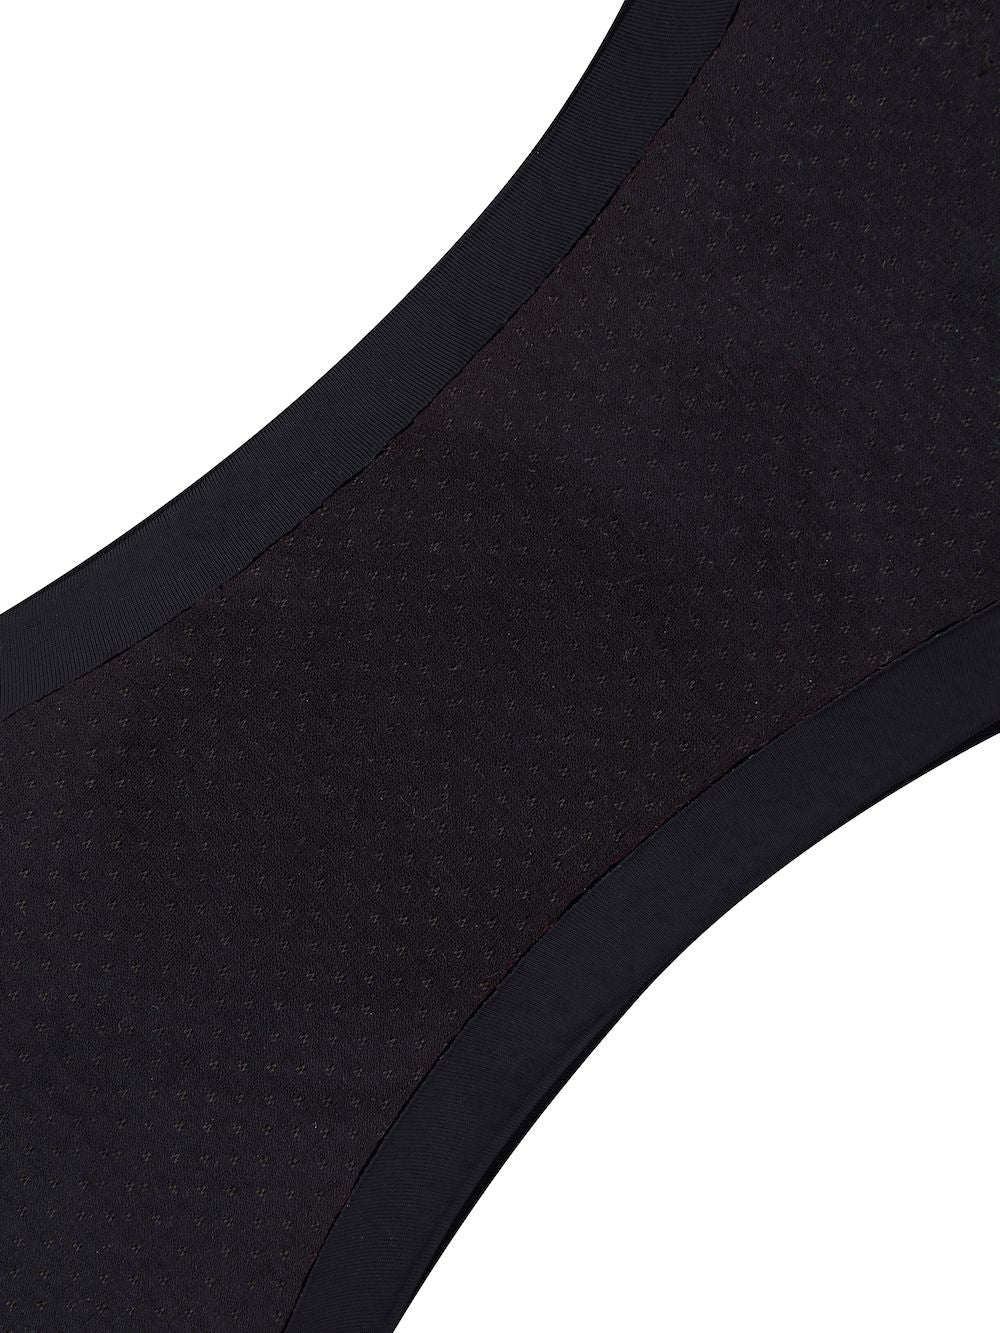 Imaara Feminine Period Underwear Inclusive Knickers. Product Serma Onyx Black